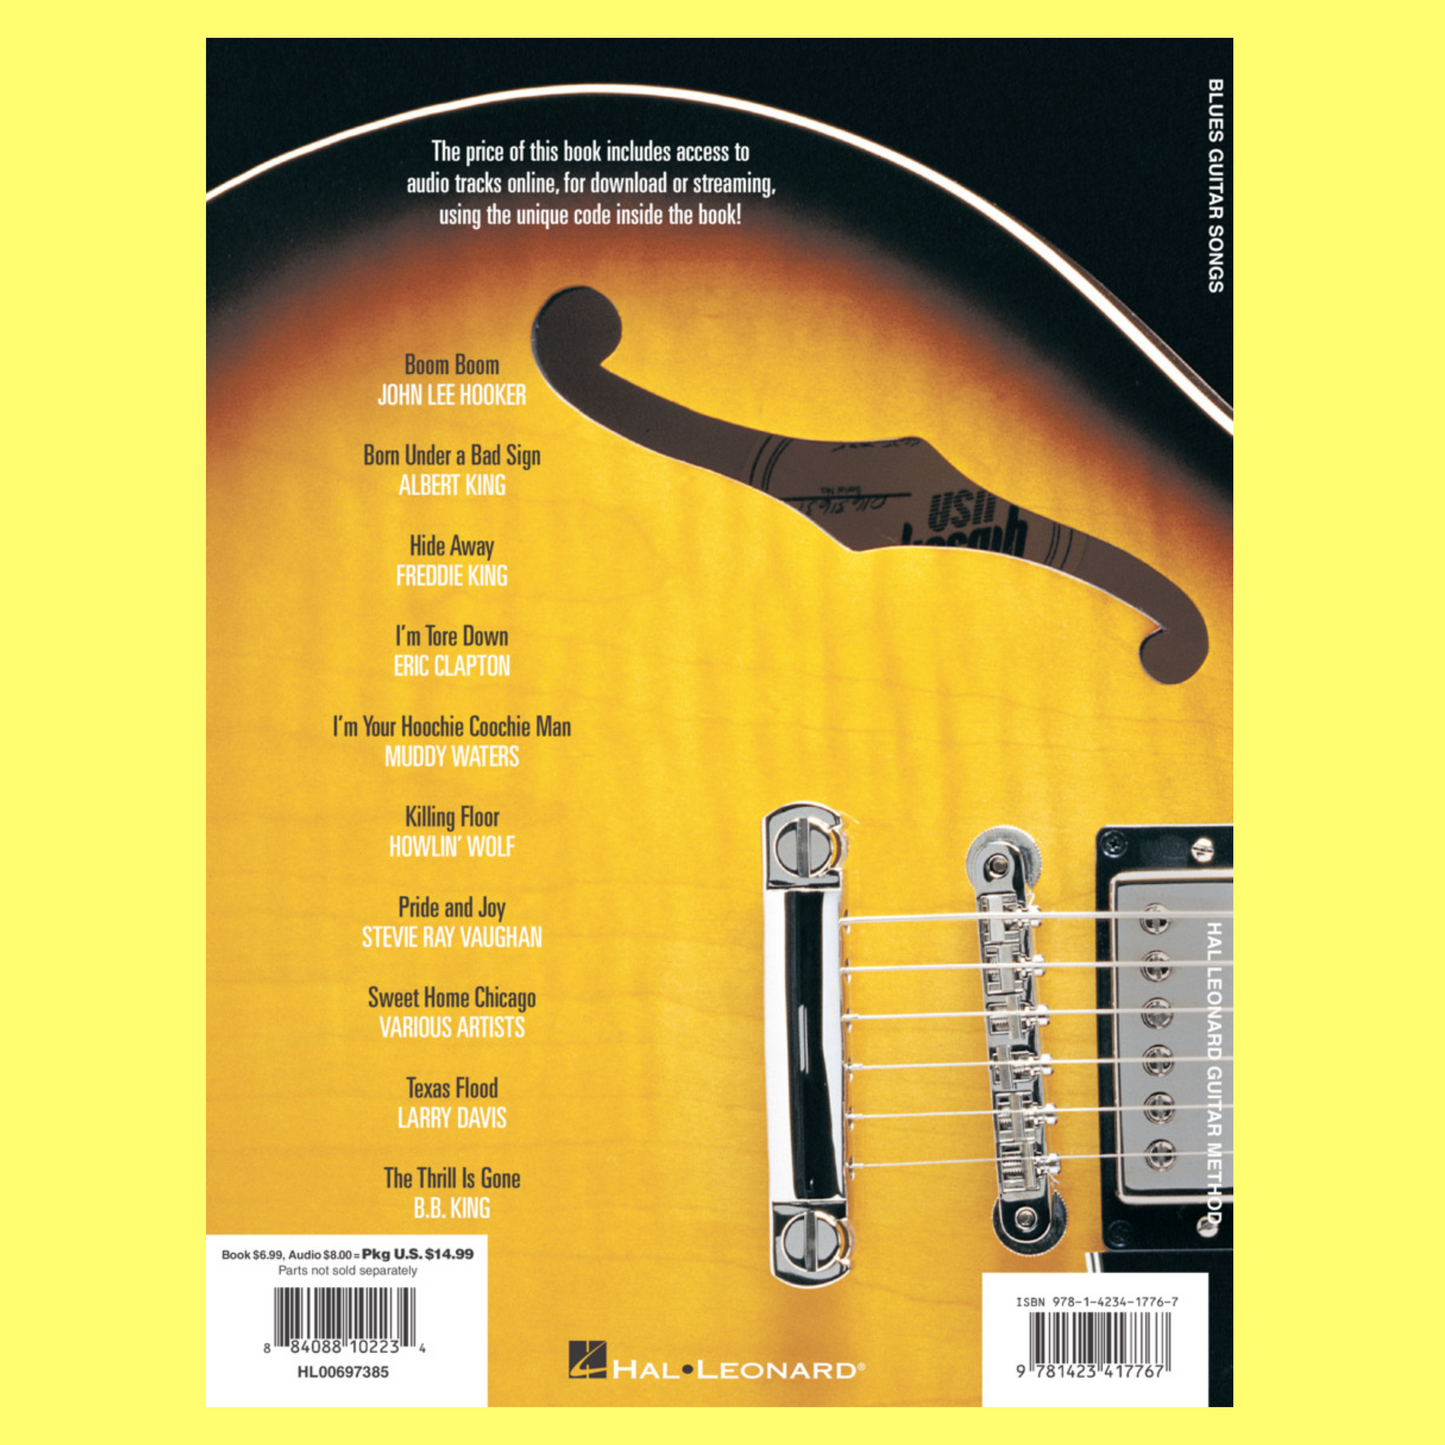 Hal Leonard Guitar Method - Blues Guitar Songbook (Book/Ola)